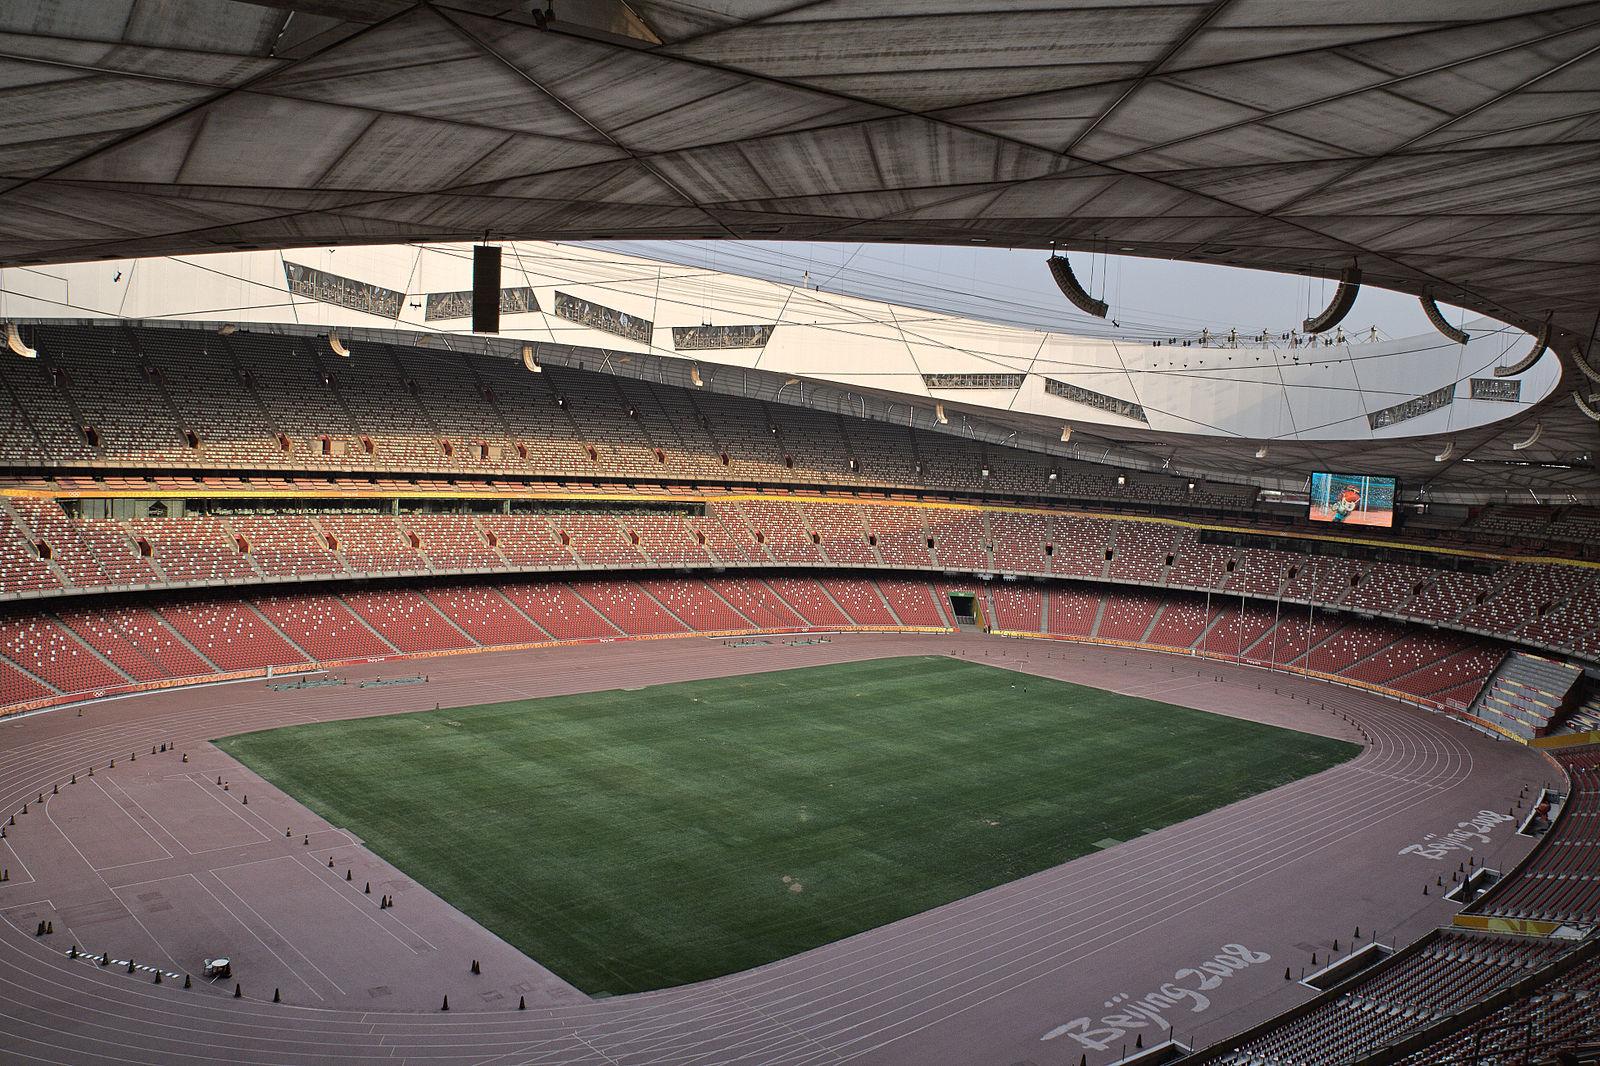 Field inside the stadium